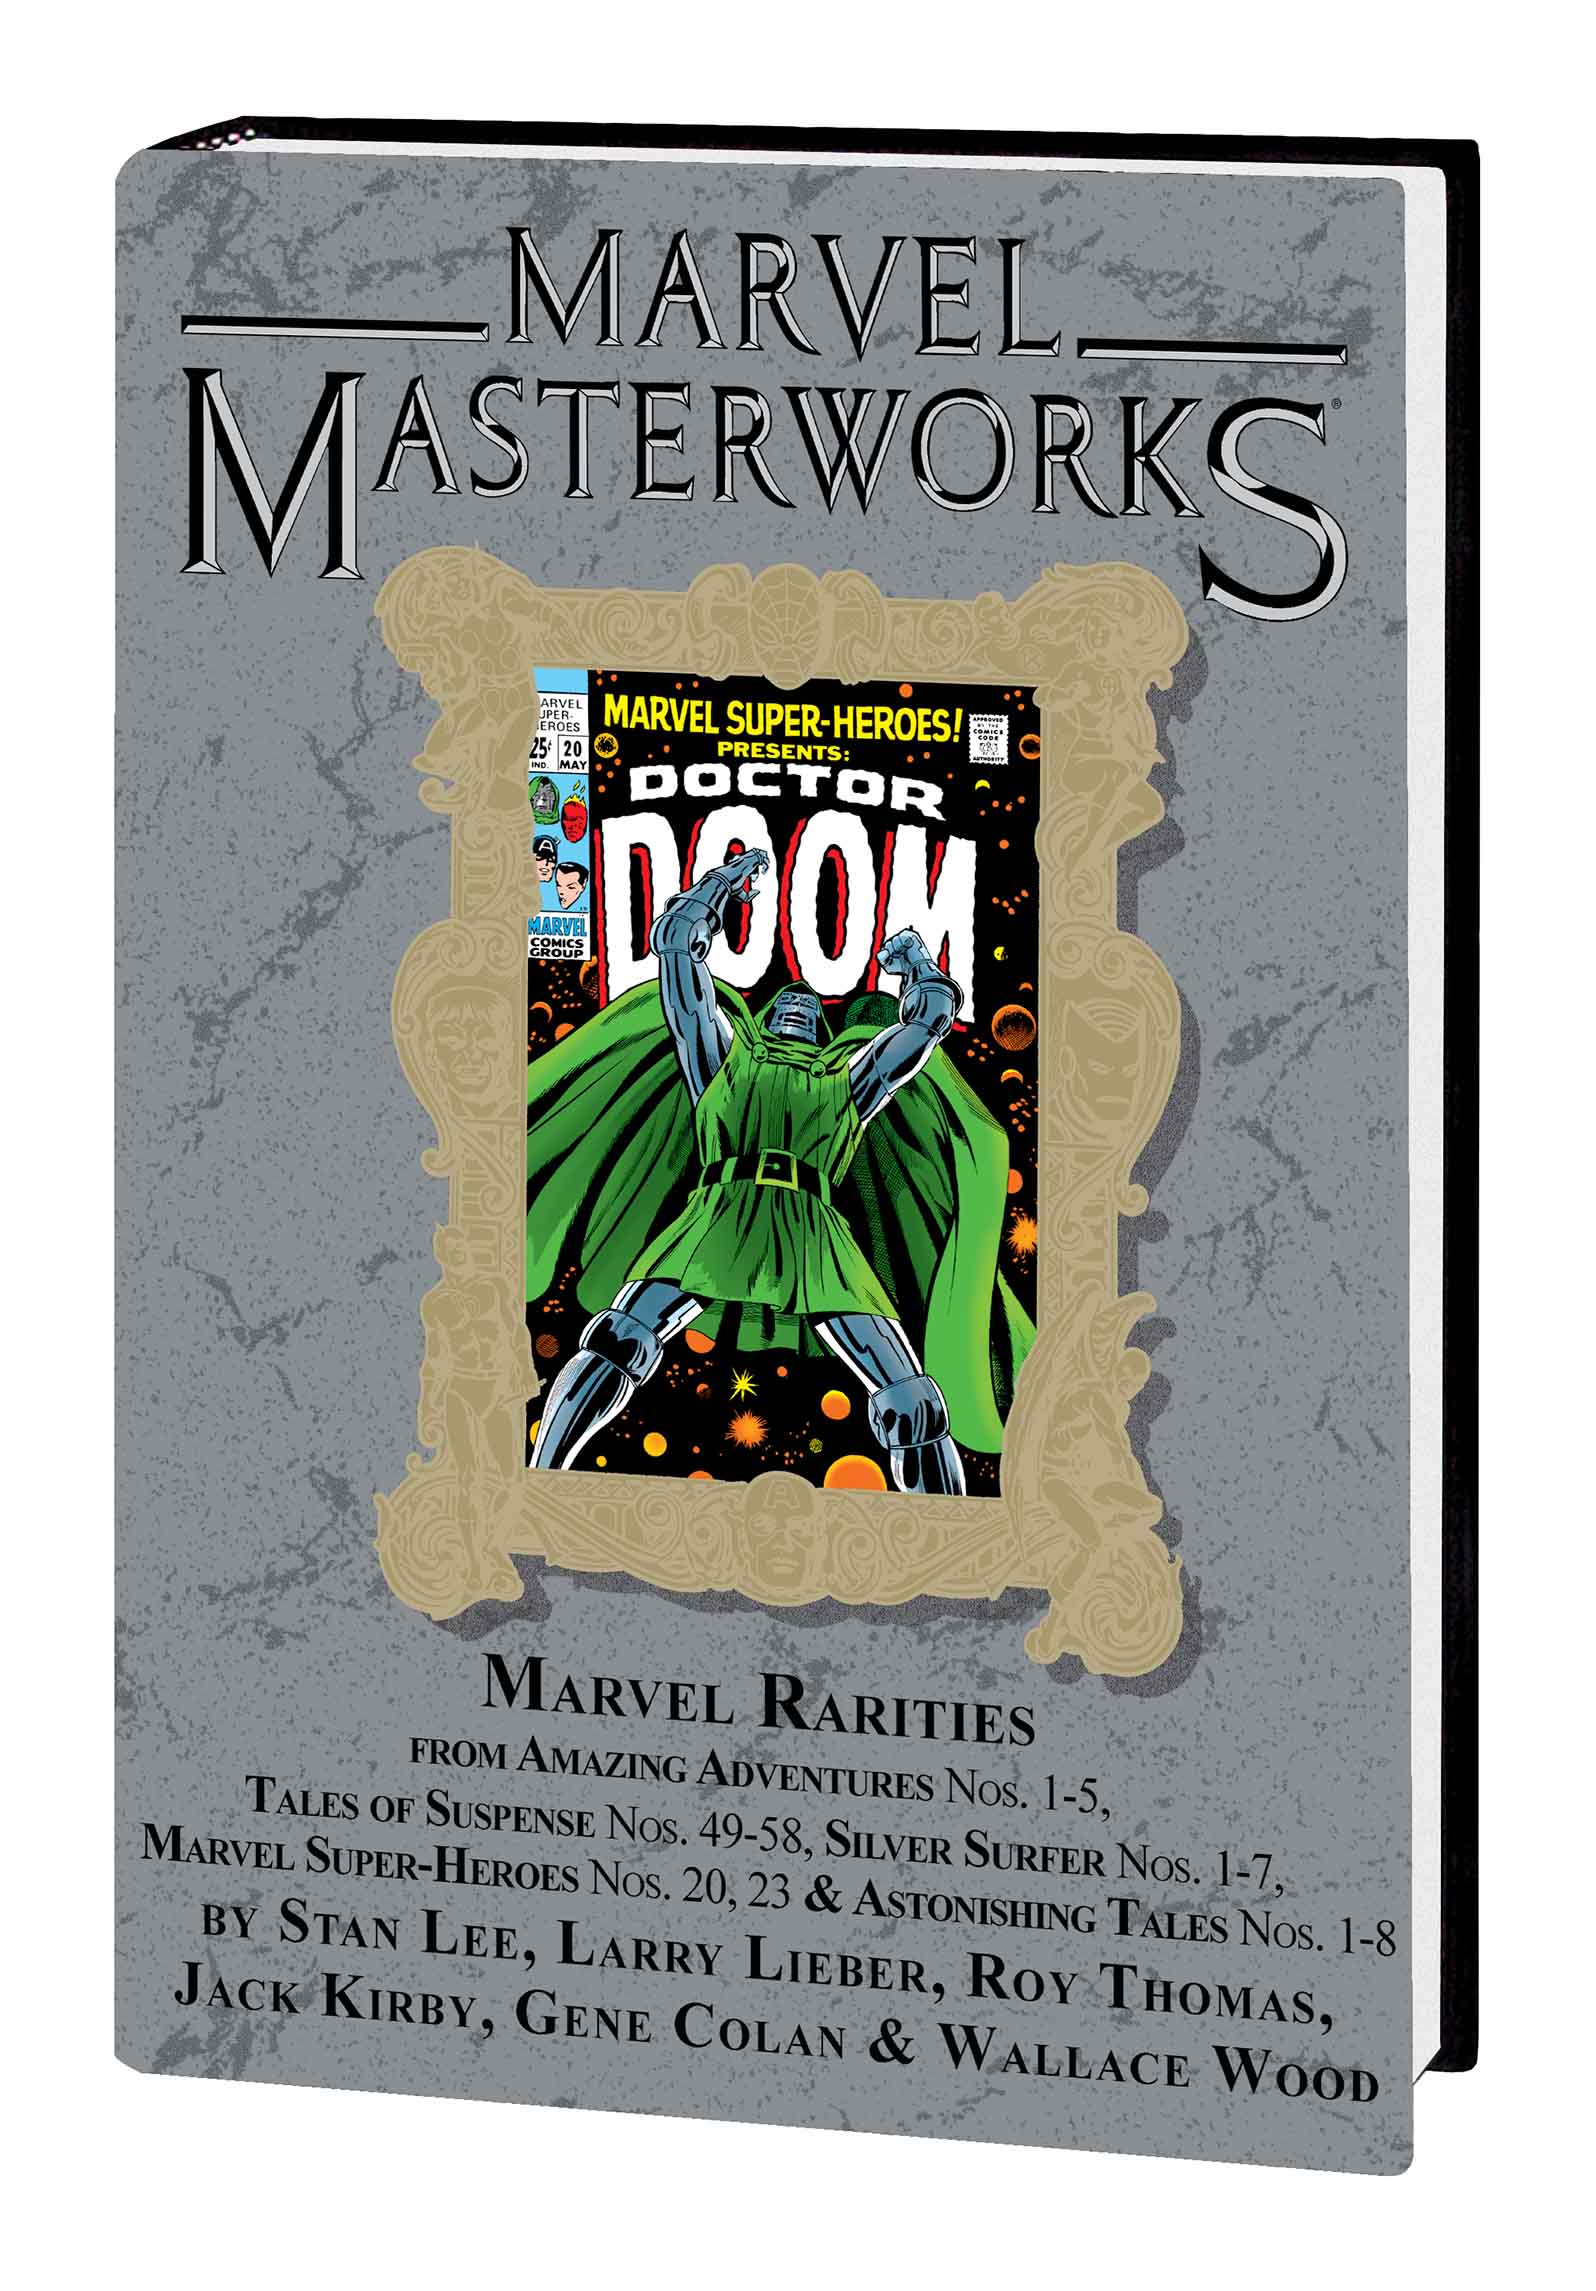 Marvel Masterworks Marvel Rarities Hardcover Comic